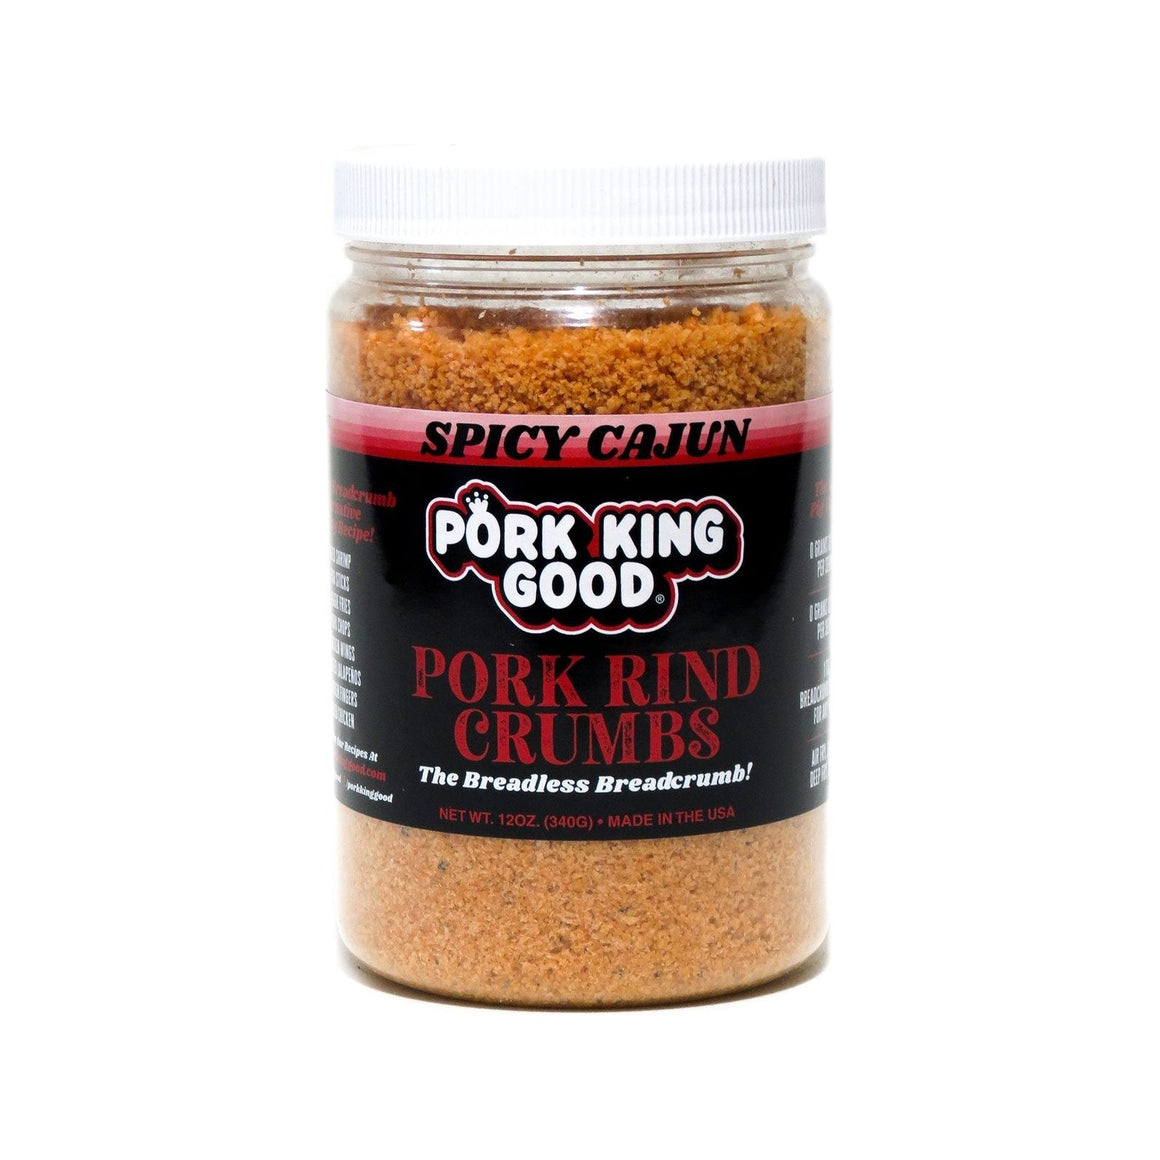 Pork King Good - Pork Rind Crumbs - Spicy Cajun - 12 oz jar